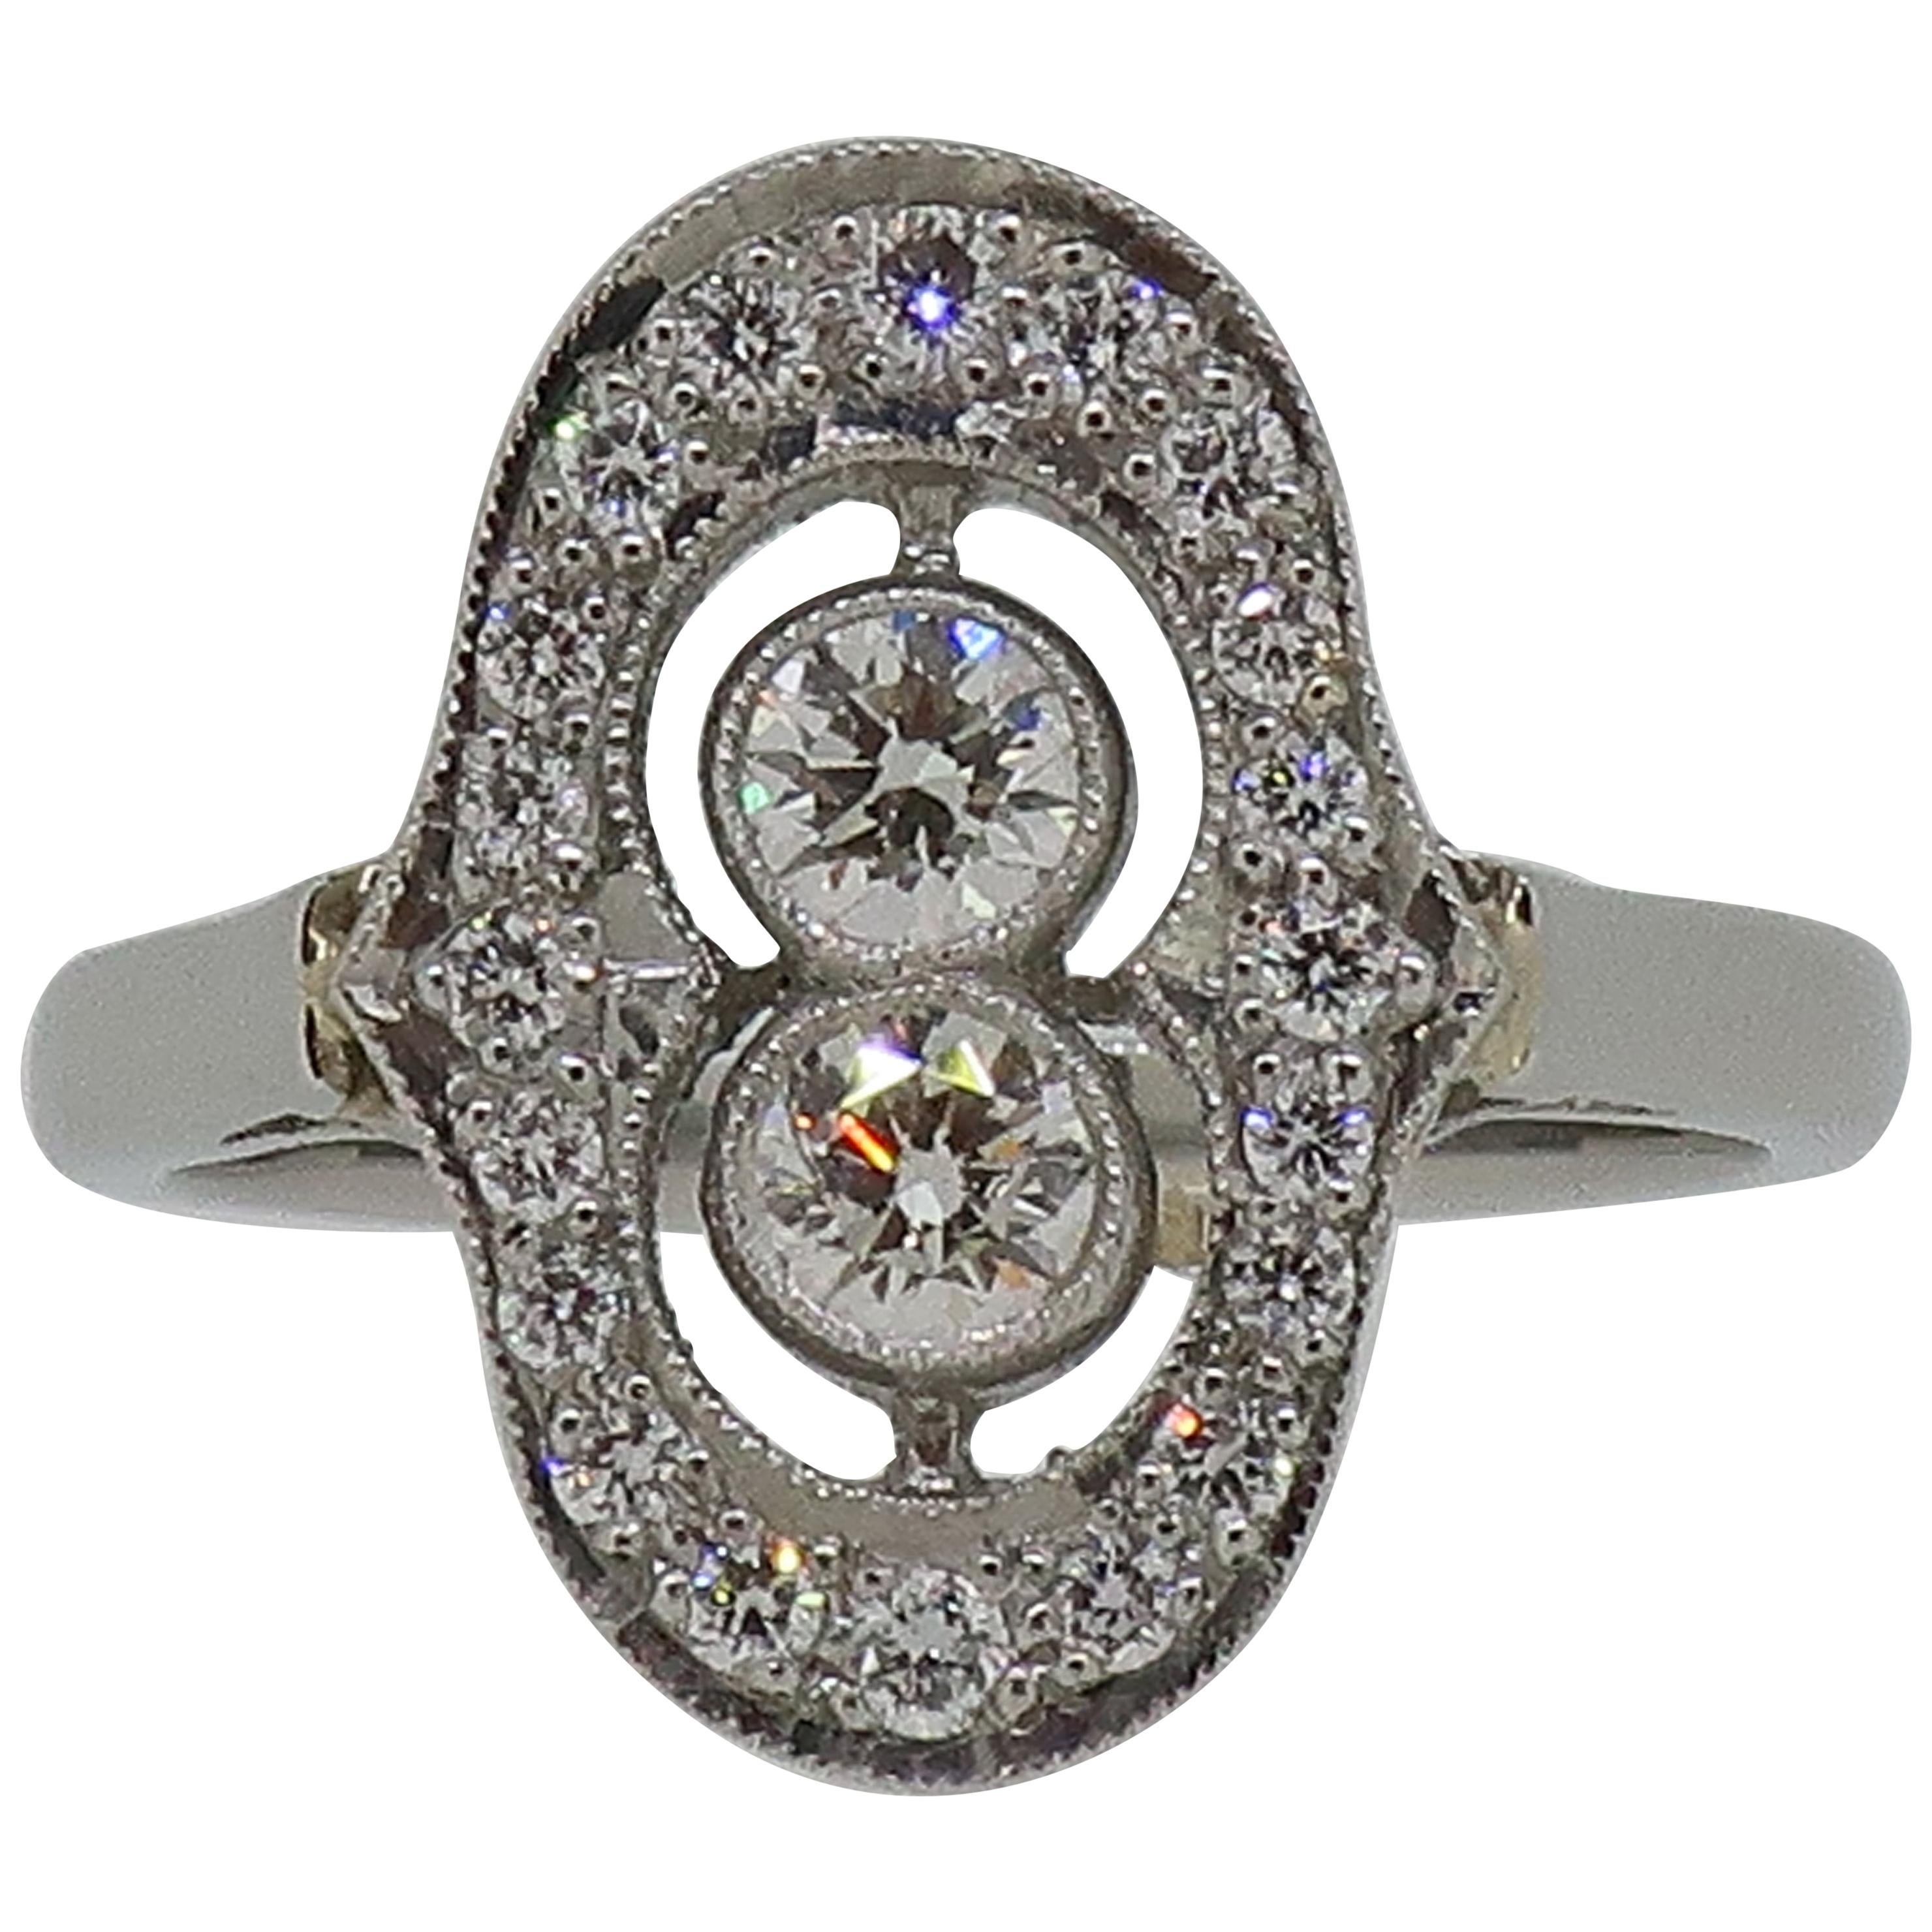 Platinum Diamond Art Deco Style Cluster Ring